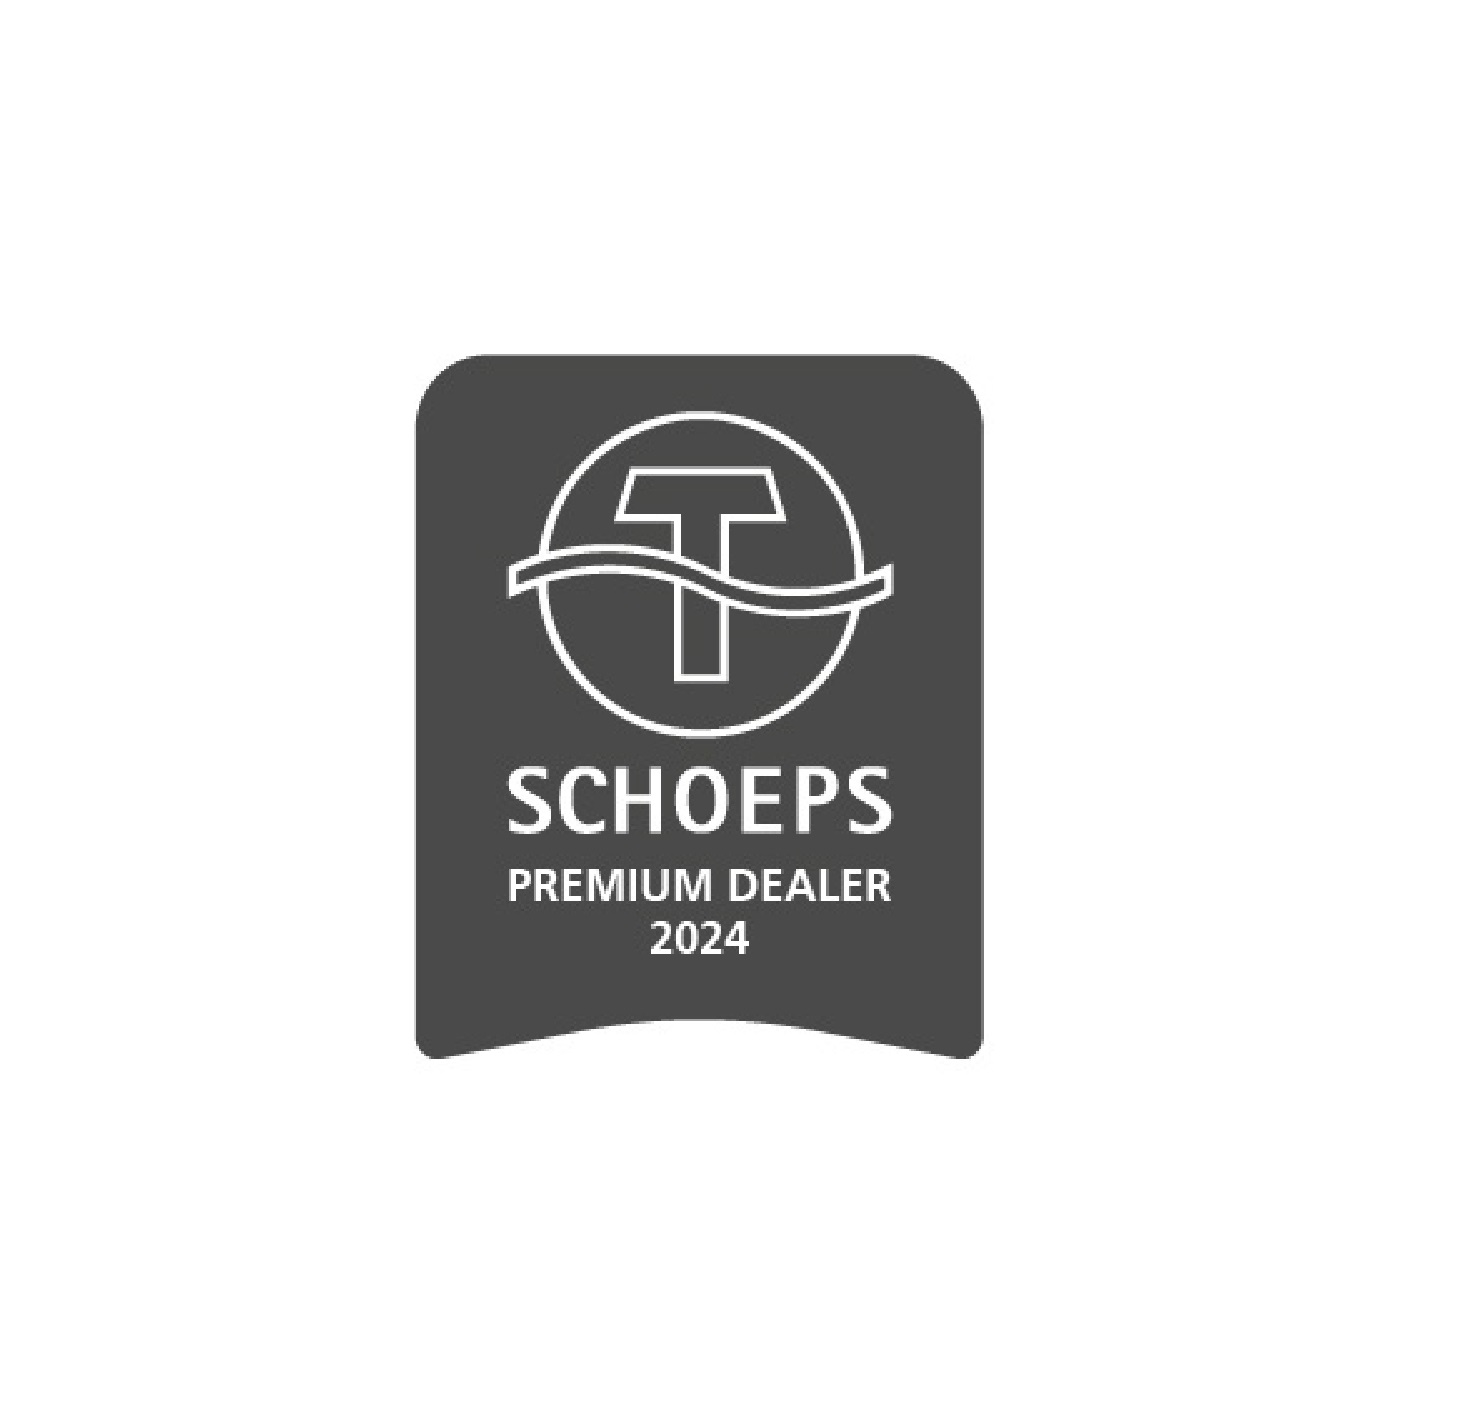 Schoeps Premium Dealer